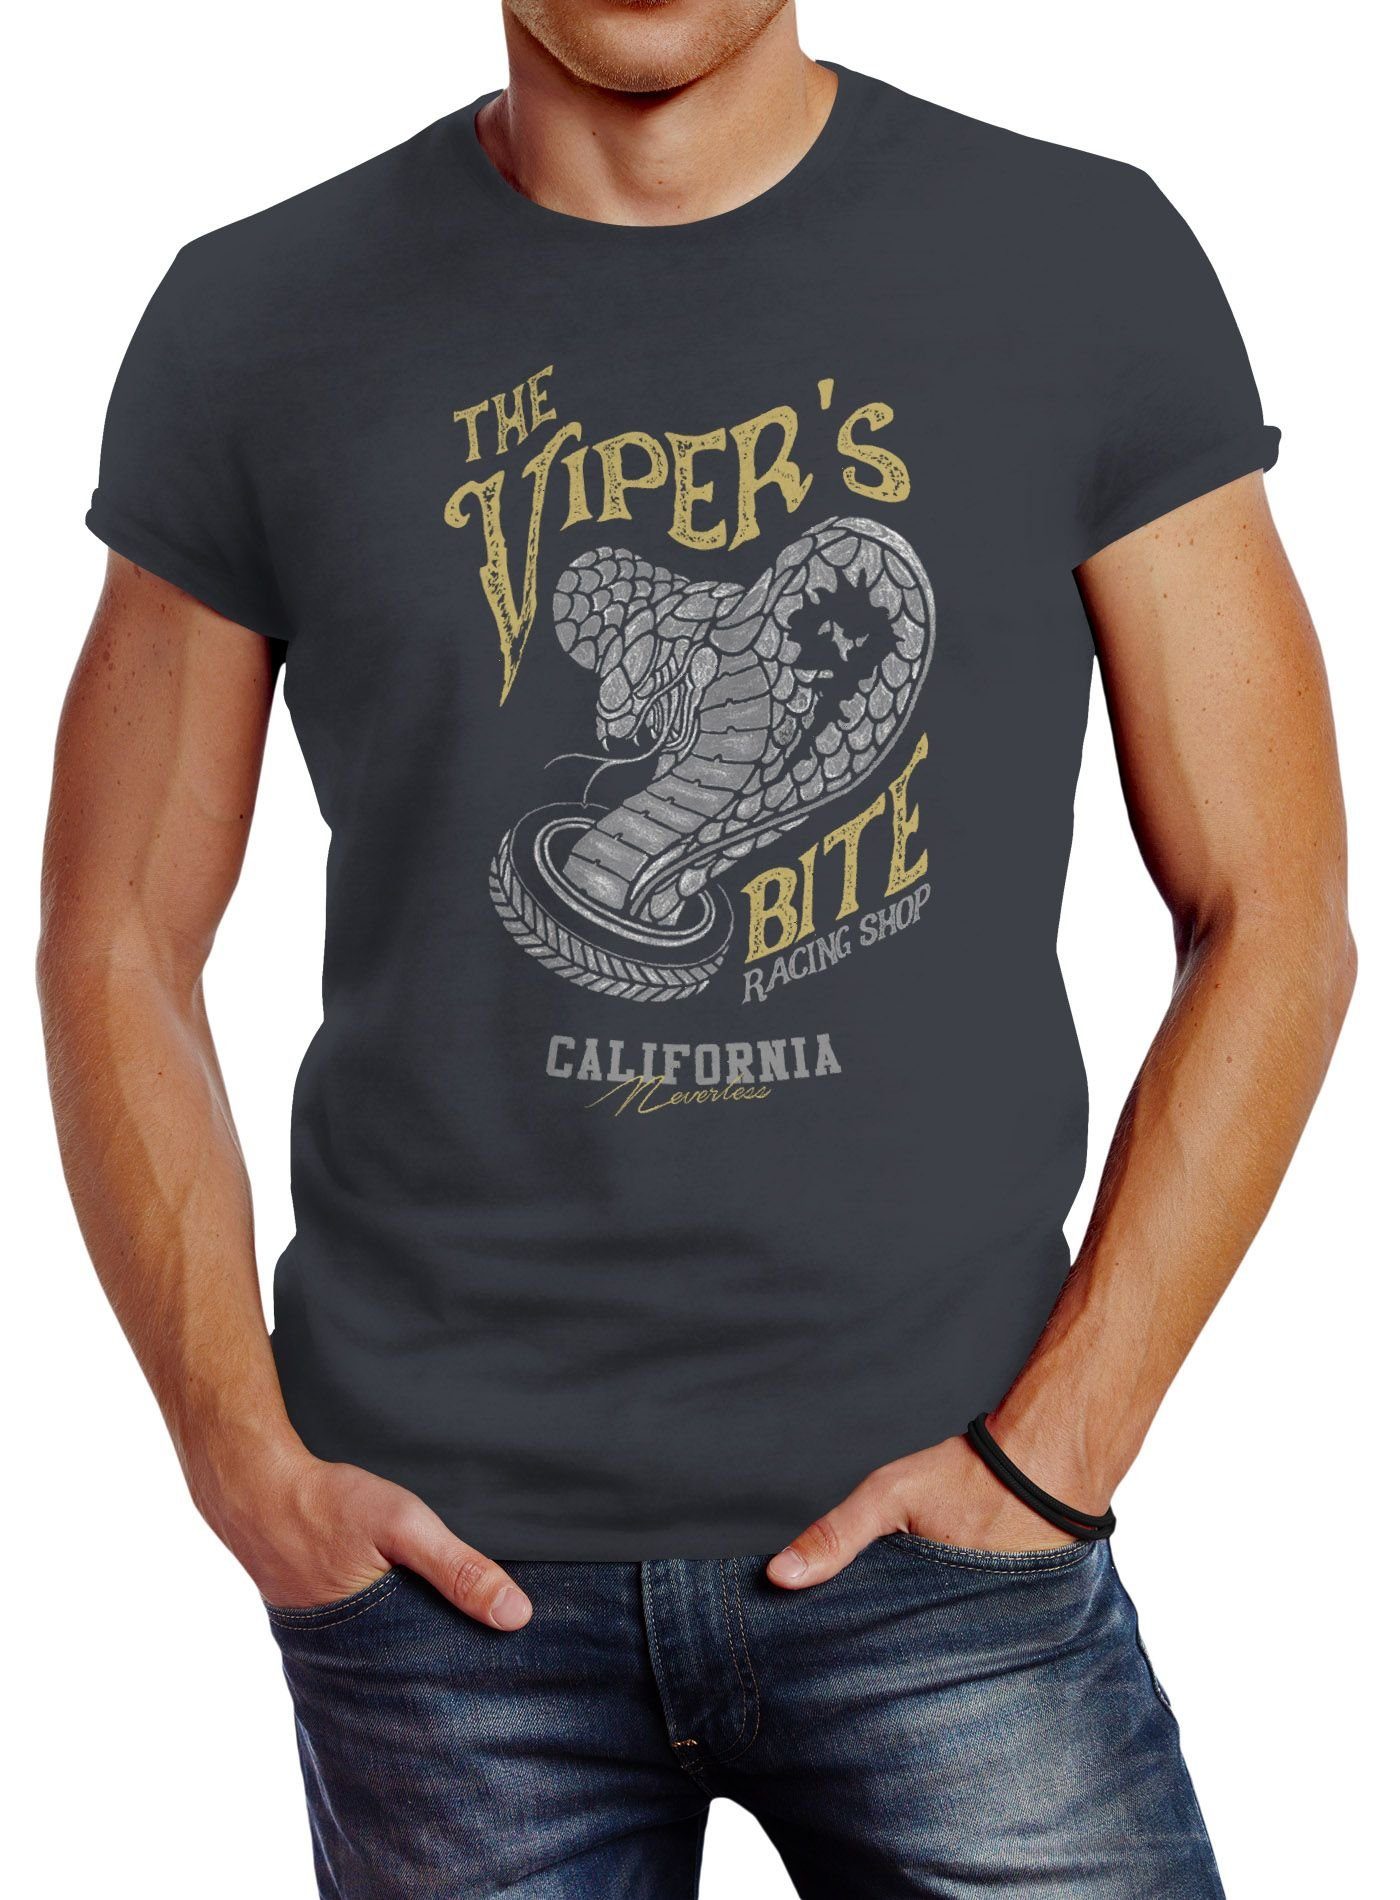 Neverless Print-Shirt Herren T-Shirt The Vipers Bite Racing Shop California Klapperschlange Tatto Style Slim Fit Neverless® mit Print grau